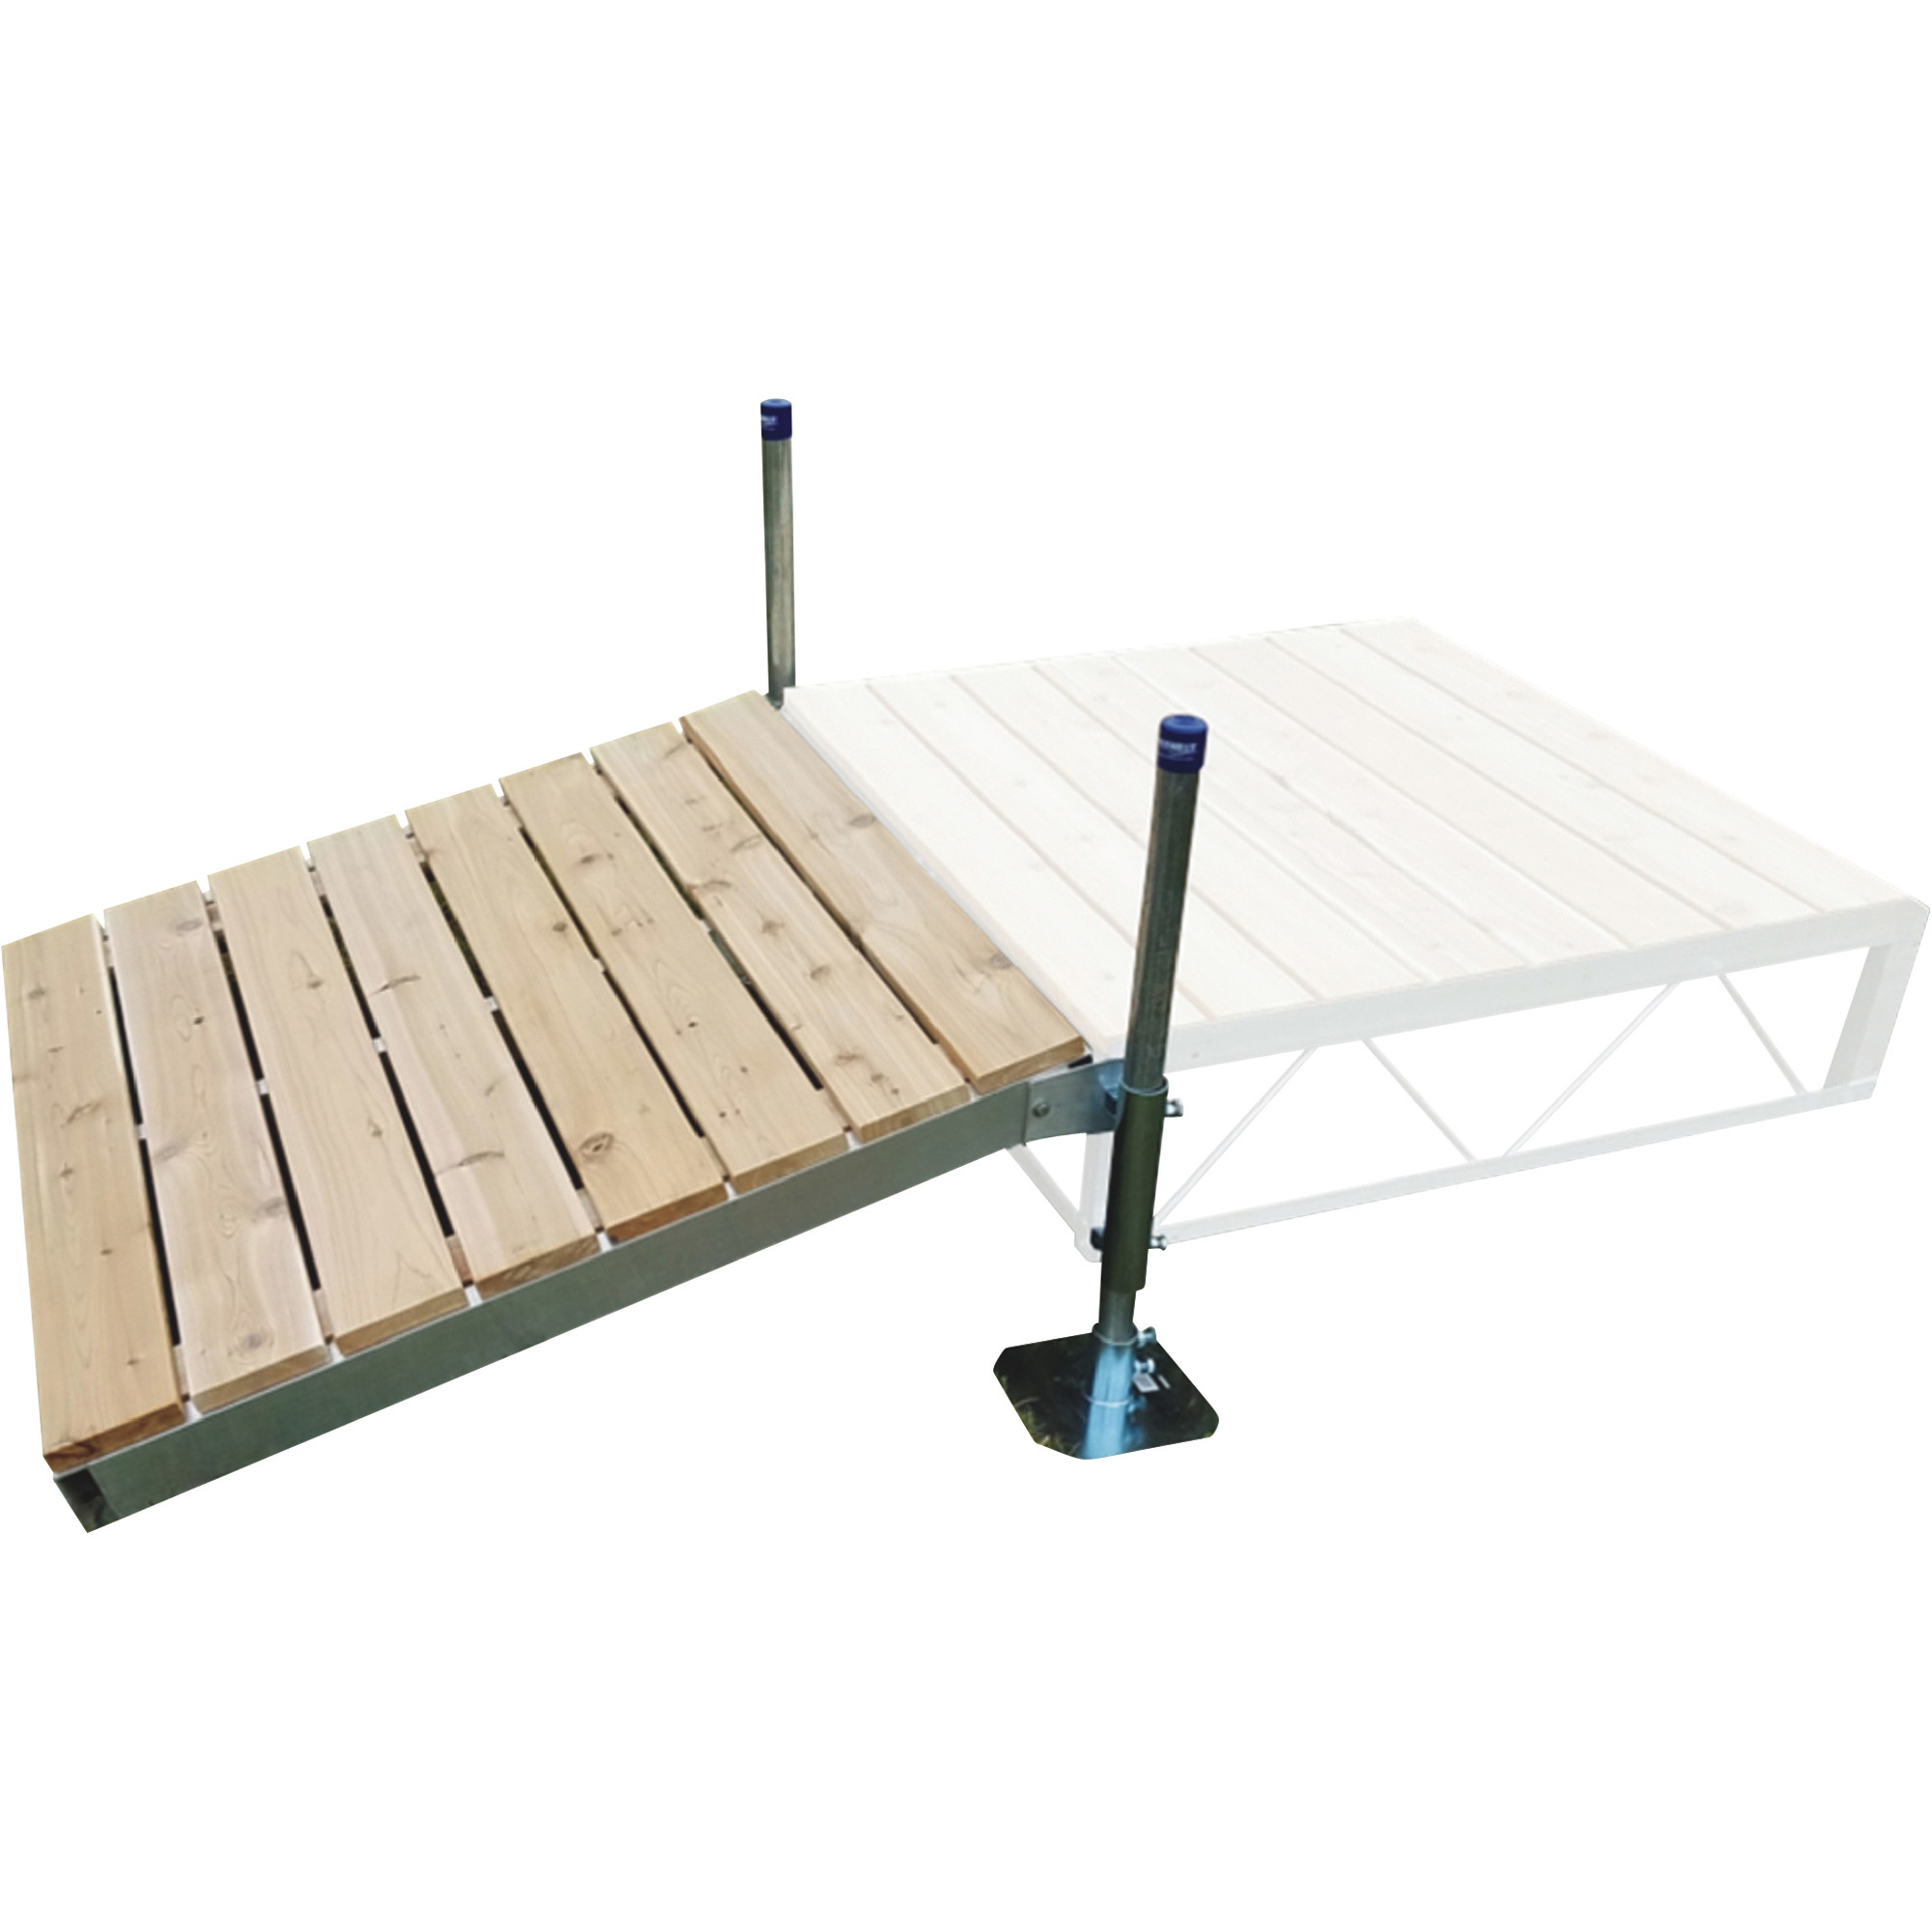 Patriot Docks 4ft. x 4ft. Universal Shore Ramp Kit â Cedar Deck Panel, Model 10340